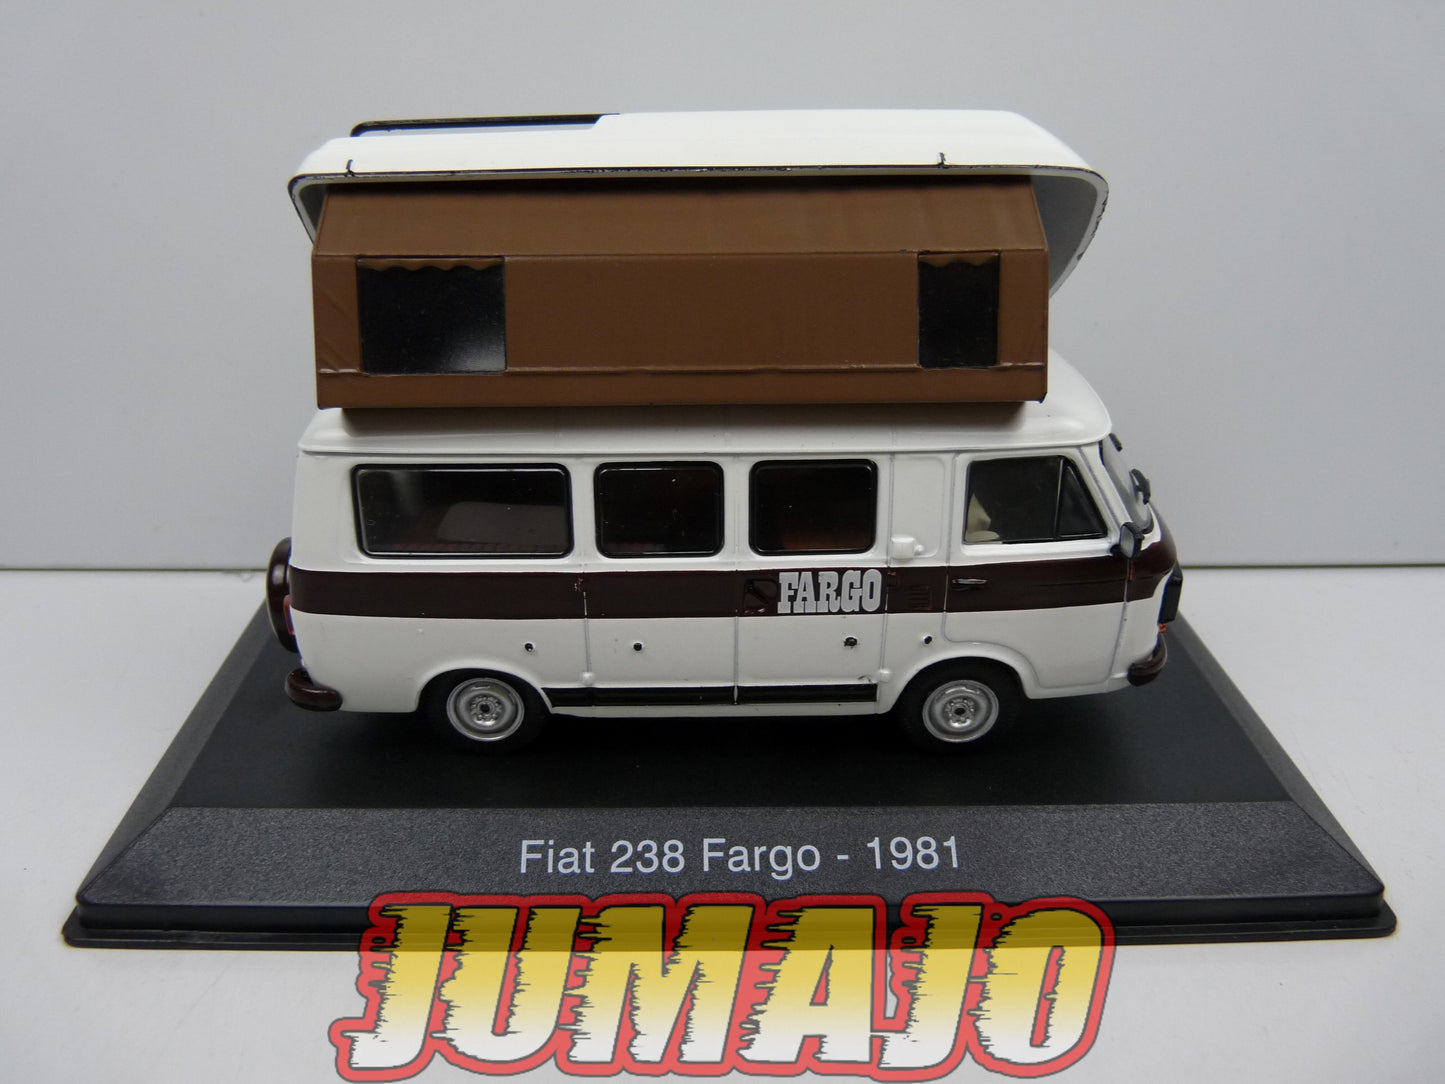 CCE162 1/43 camping cars hachettes IXO : Fiat 238 Fargo 1981